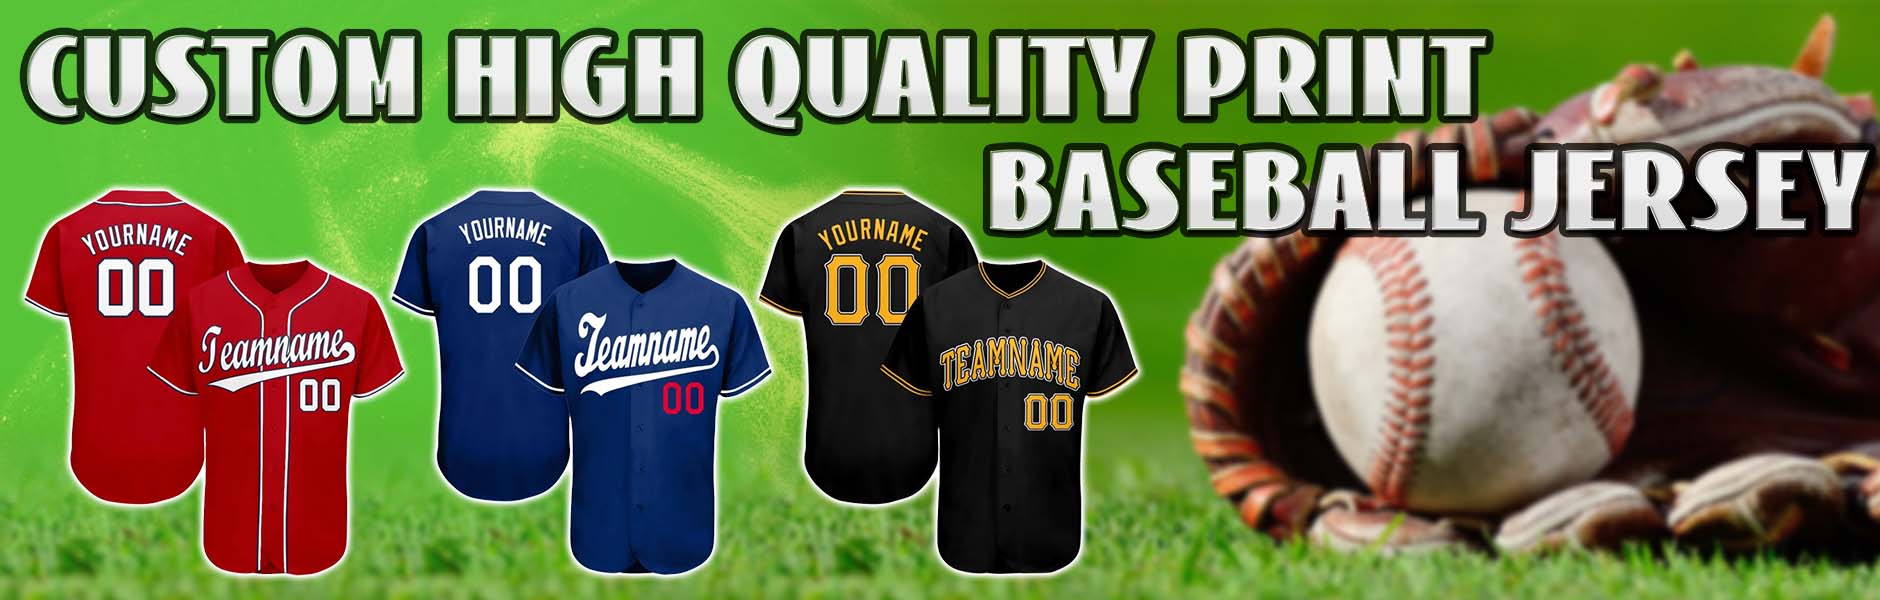 Custom Baseball & Softball Jerseys Cheap